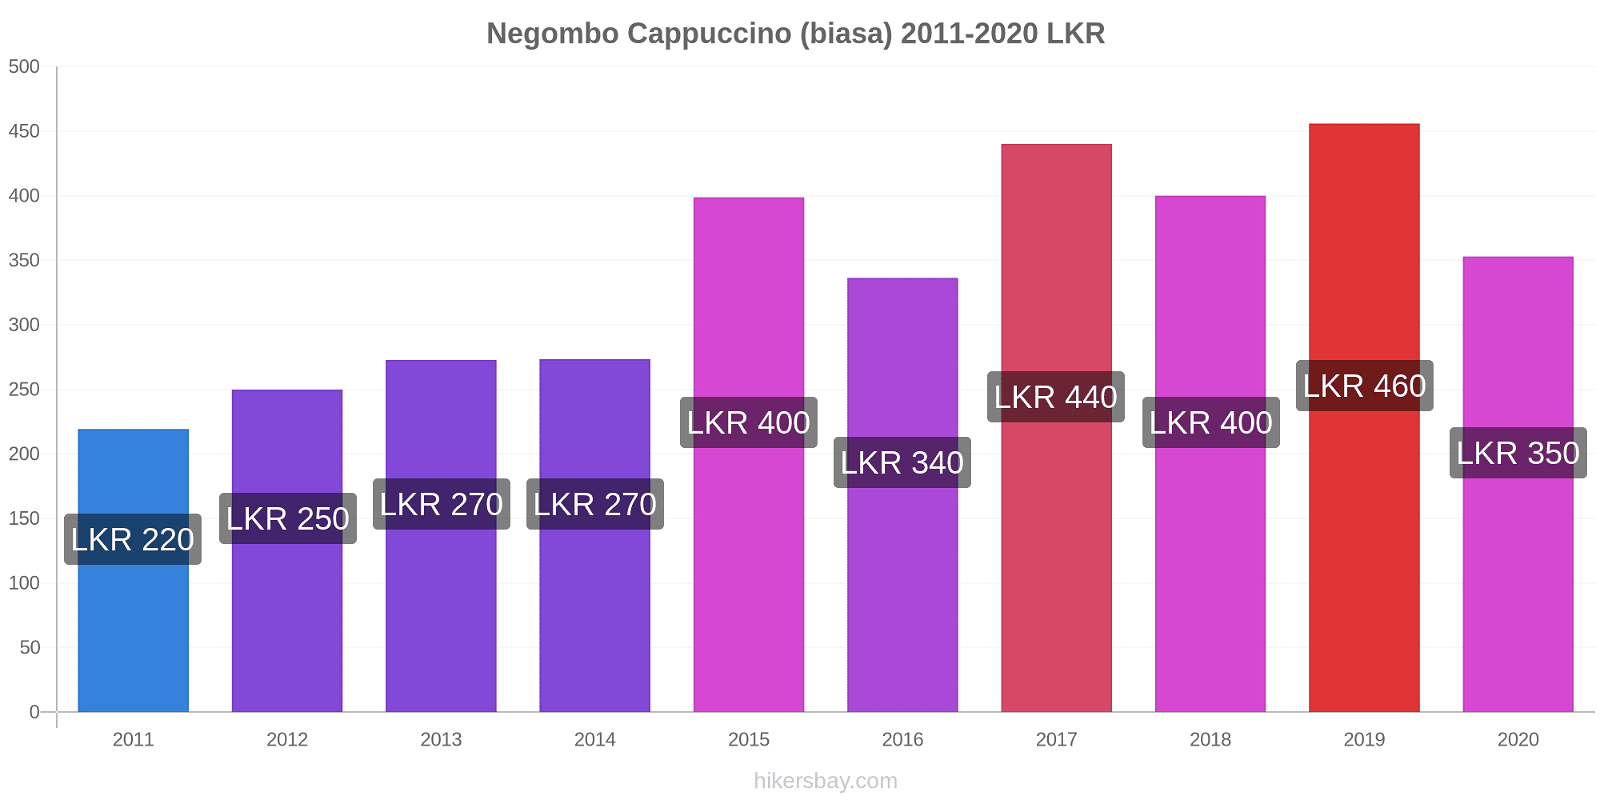 Negombo perubahan harga Cappuccino (biasa) hikersbay.com